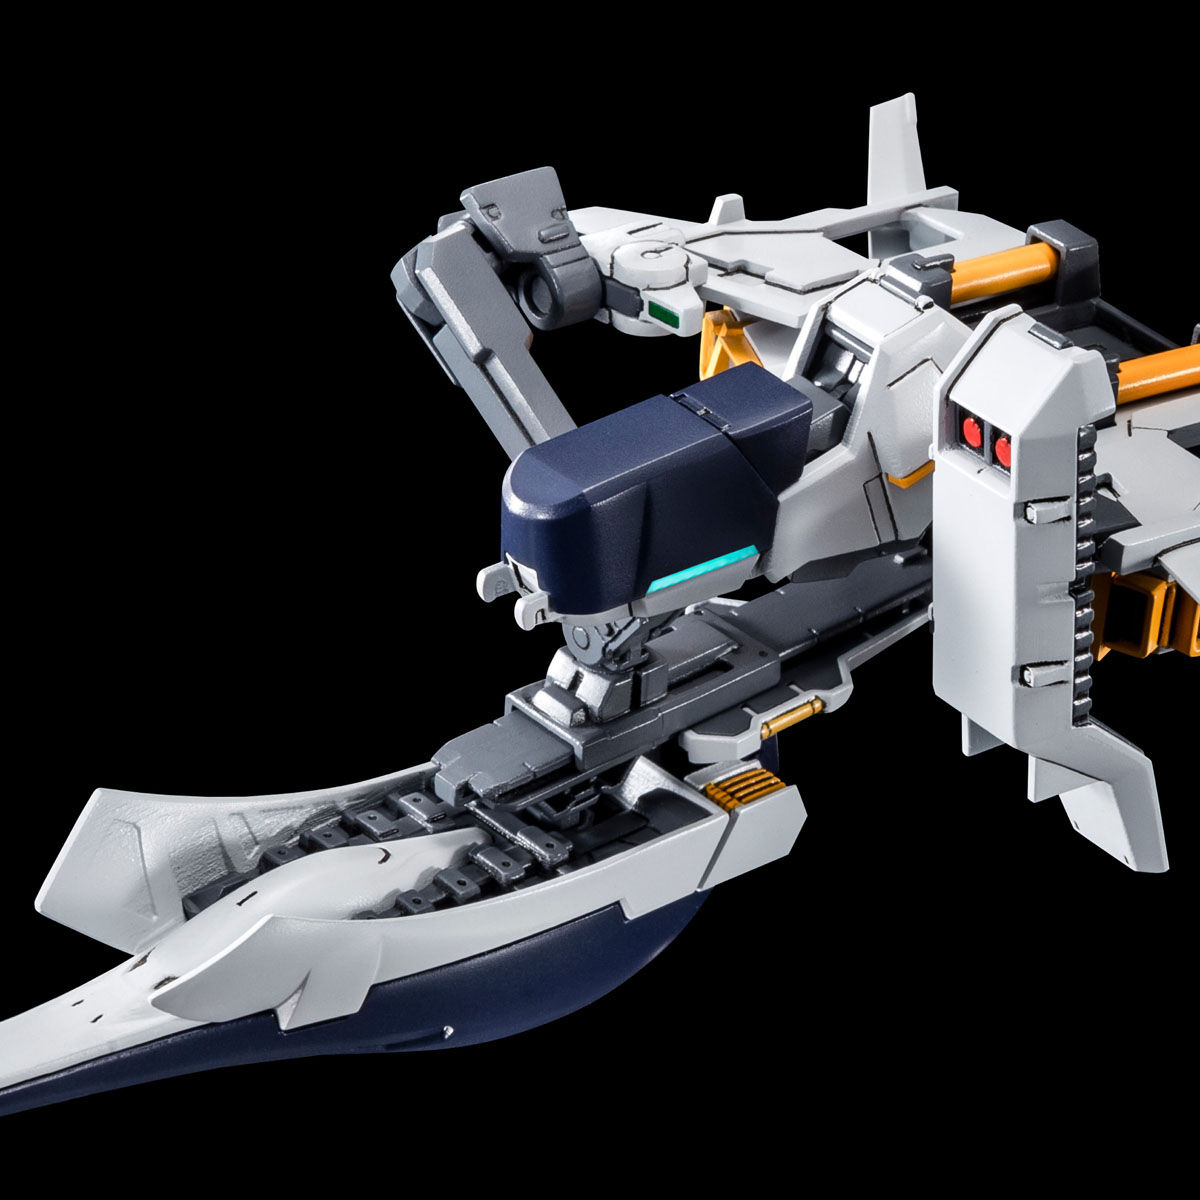 MG 1/100 MP-X86 Emergency Escape Pod[Primrose] Expansion Parts for MG RX-121-1 Gundam TR-1[Hazel Custom]